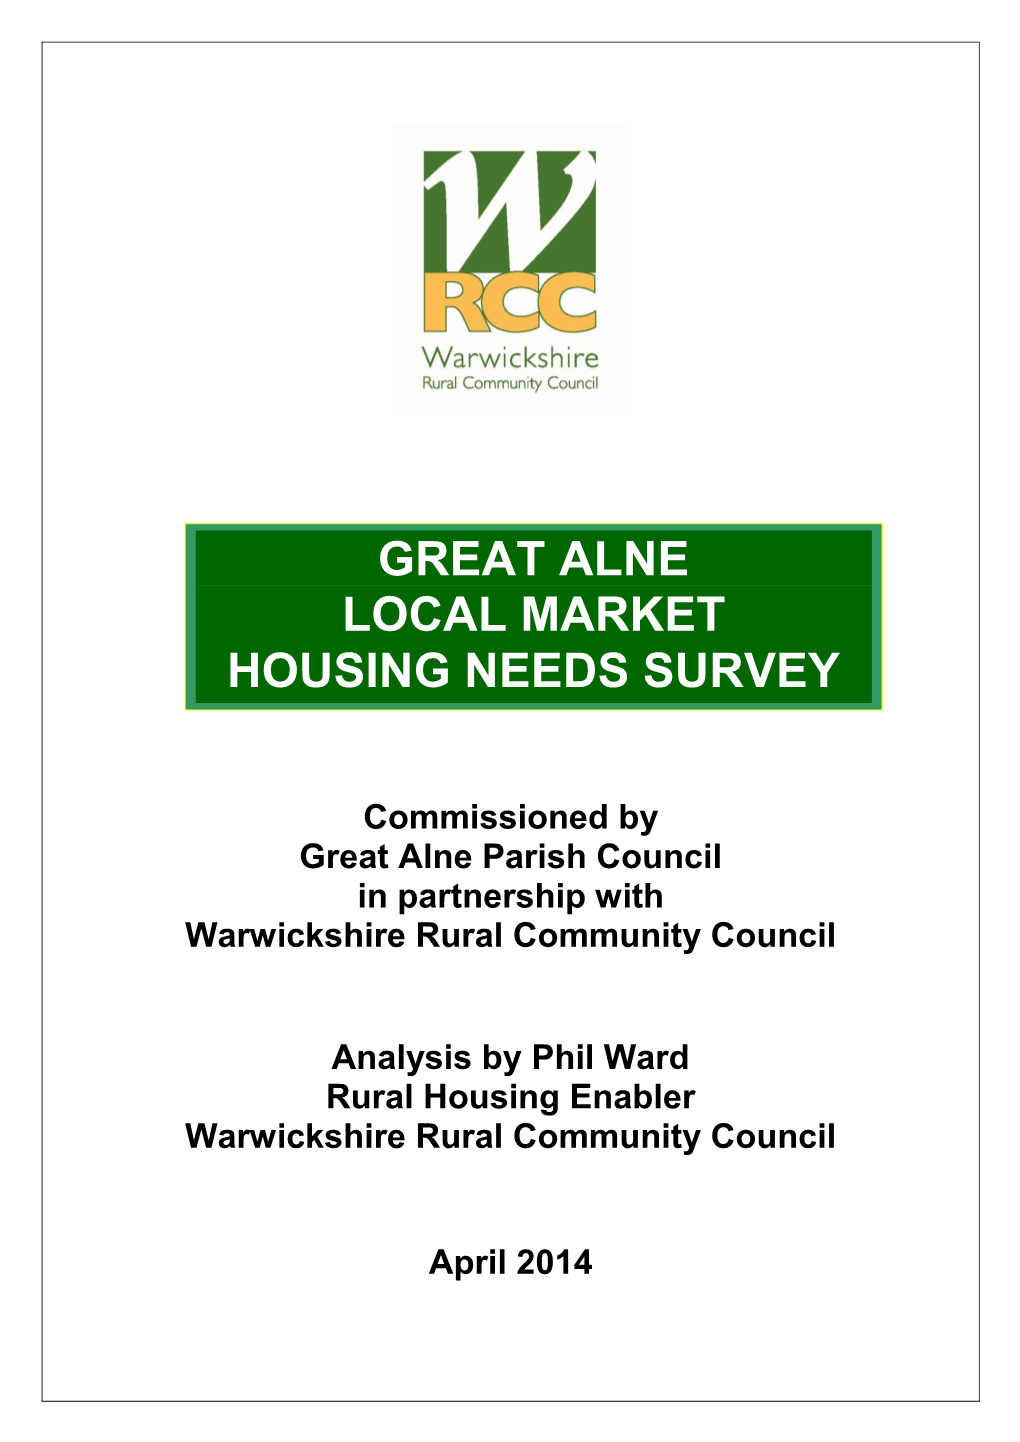 Great Alne Local Market Housing Needs Survey